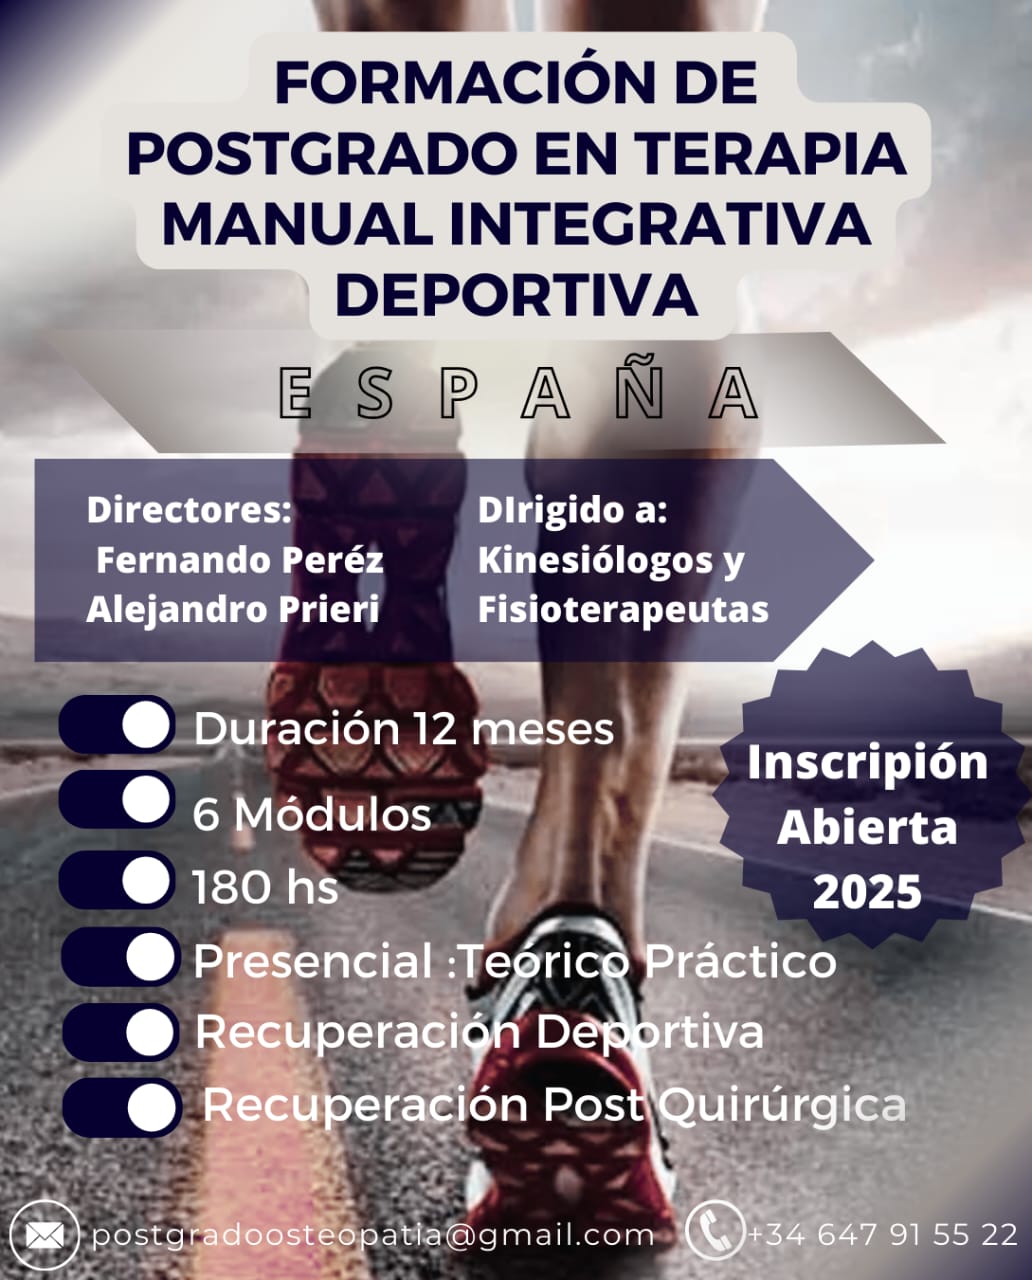 Formacion post grado osteopatia deportiva integrativa santiago de compostela 2025 portada web 02